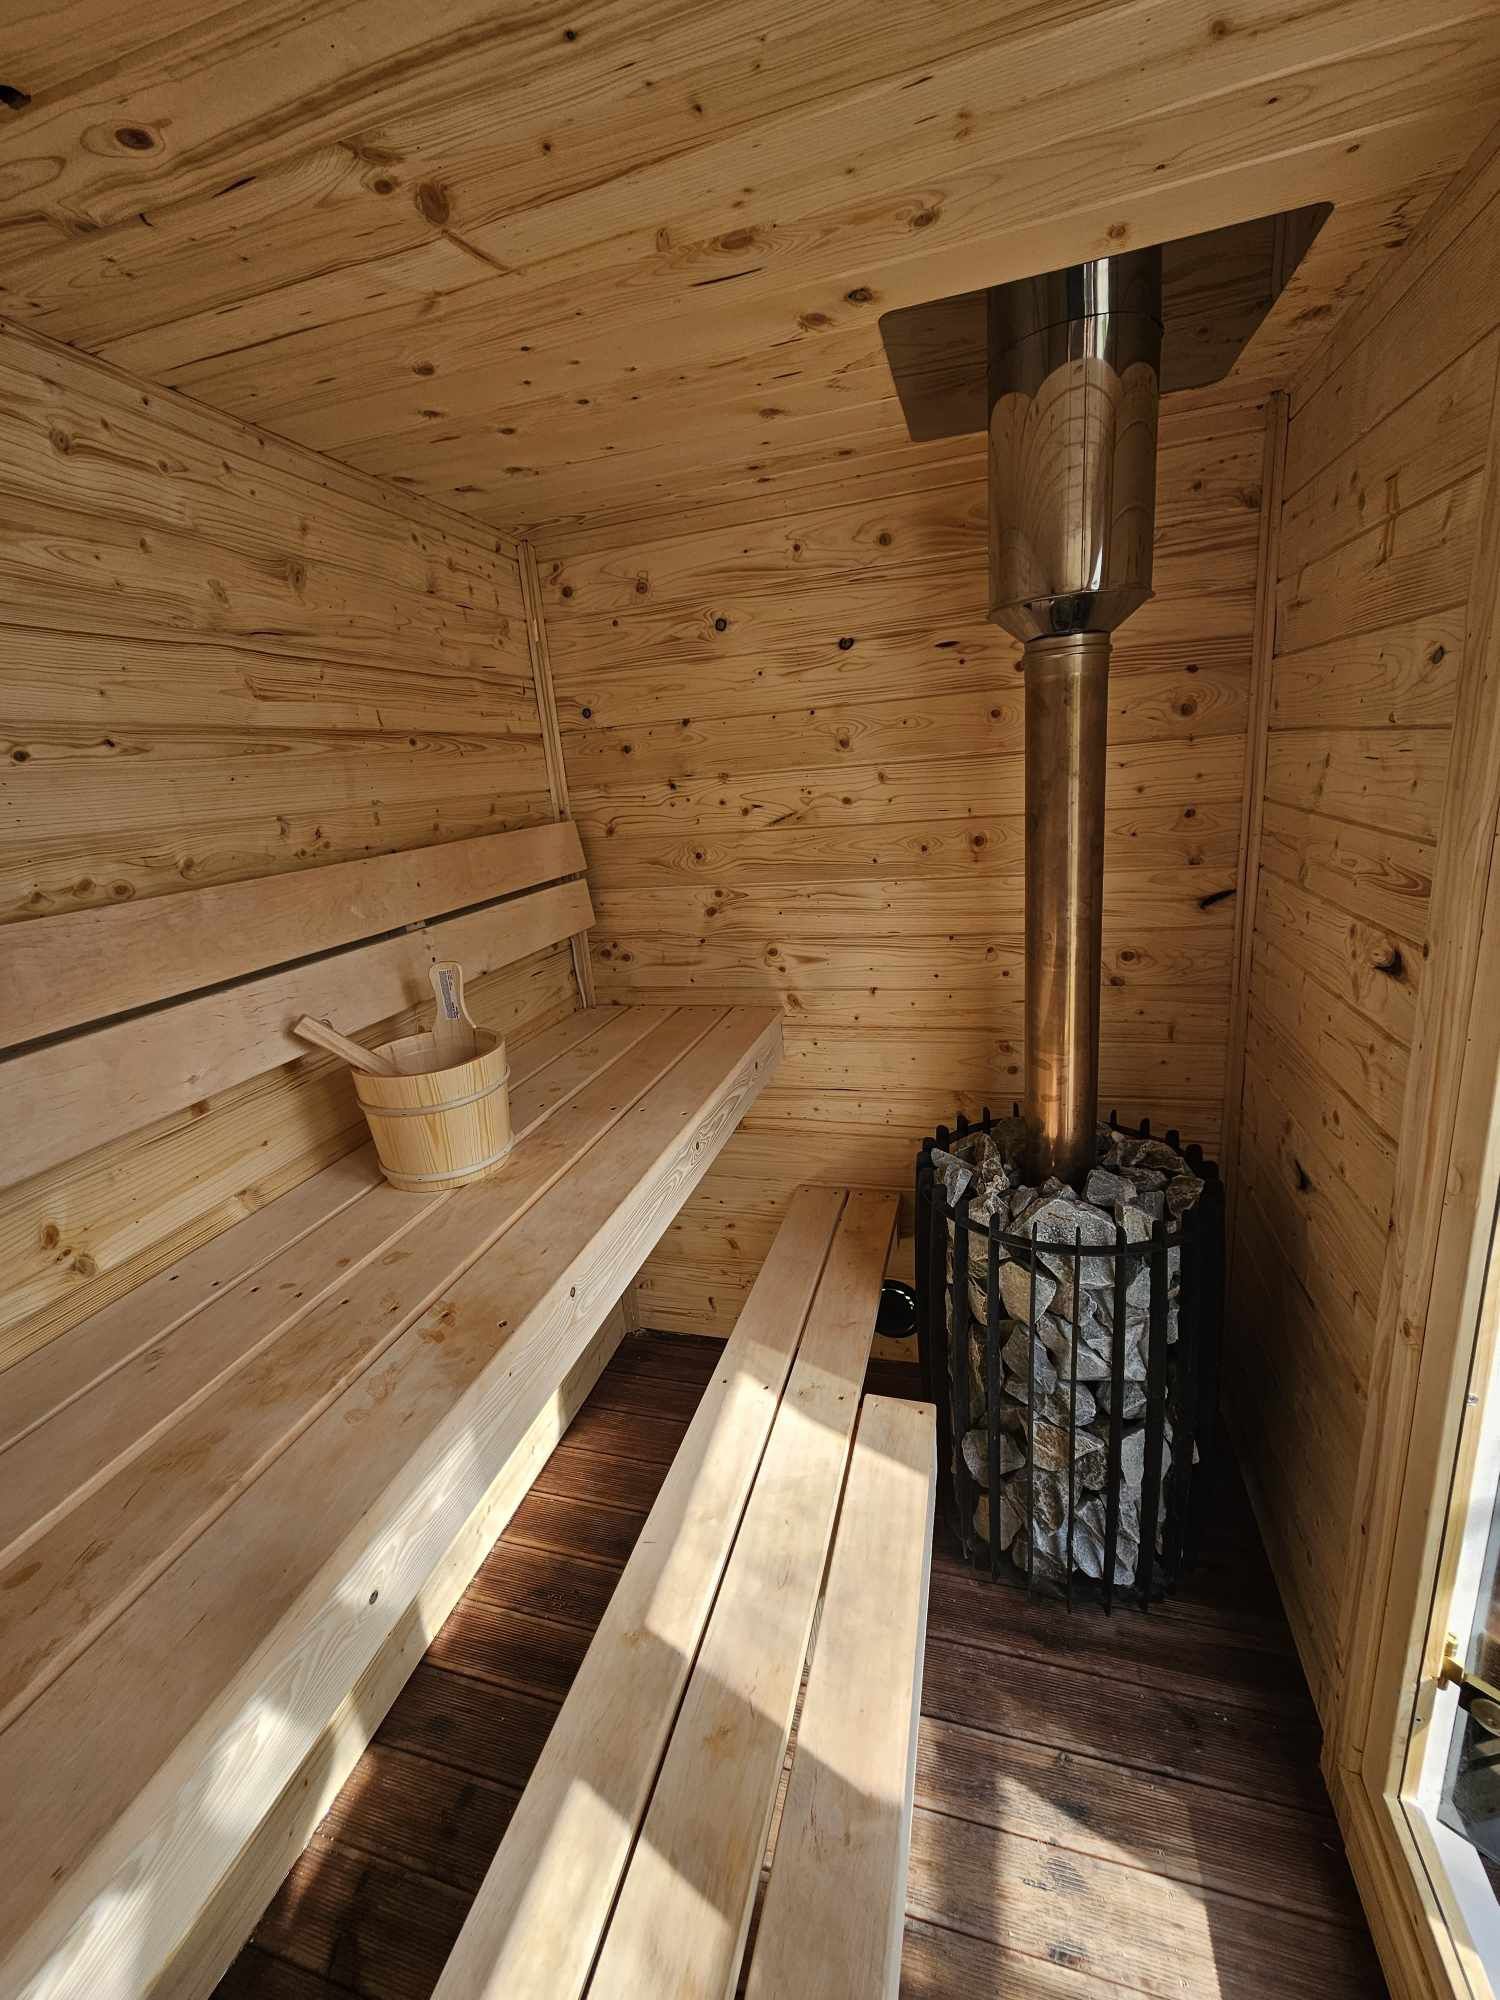 Mobilne spa jacuzzi sauna ruska balia całoroczne